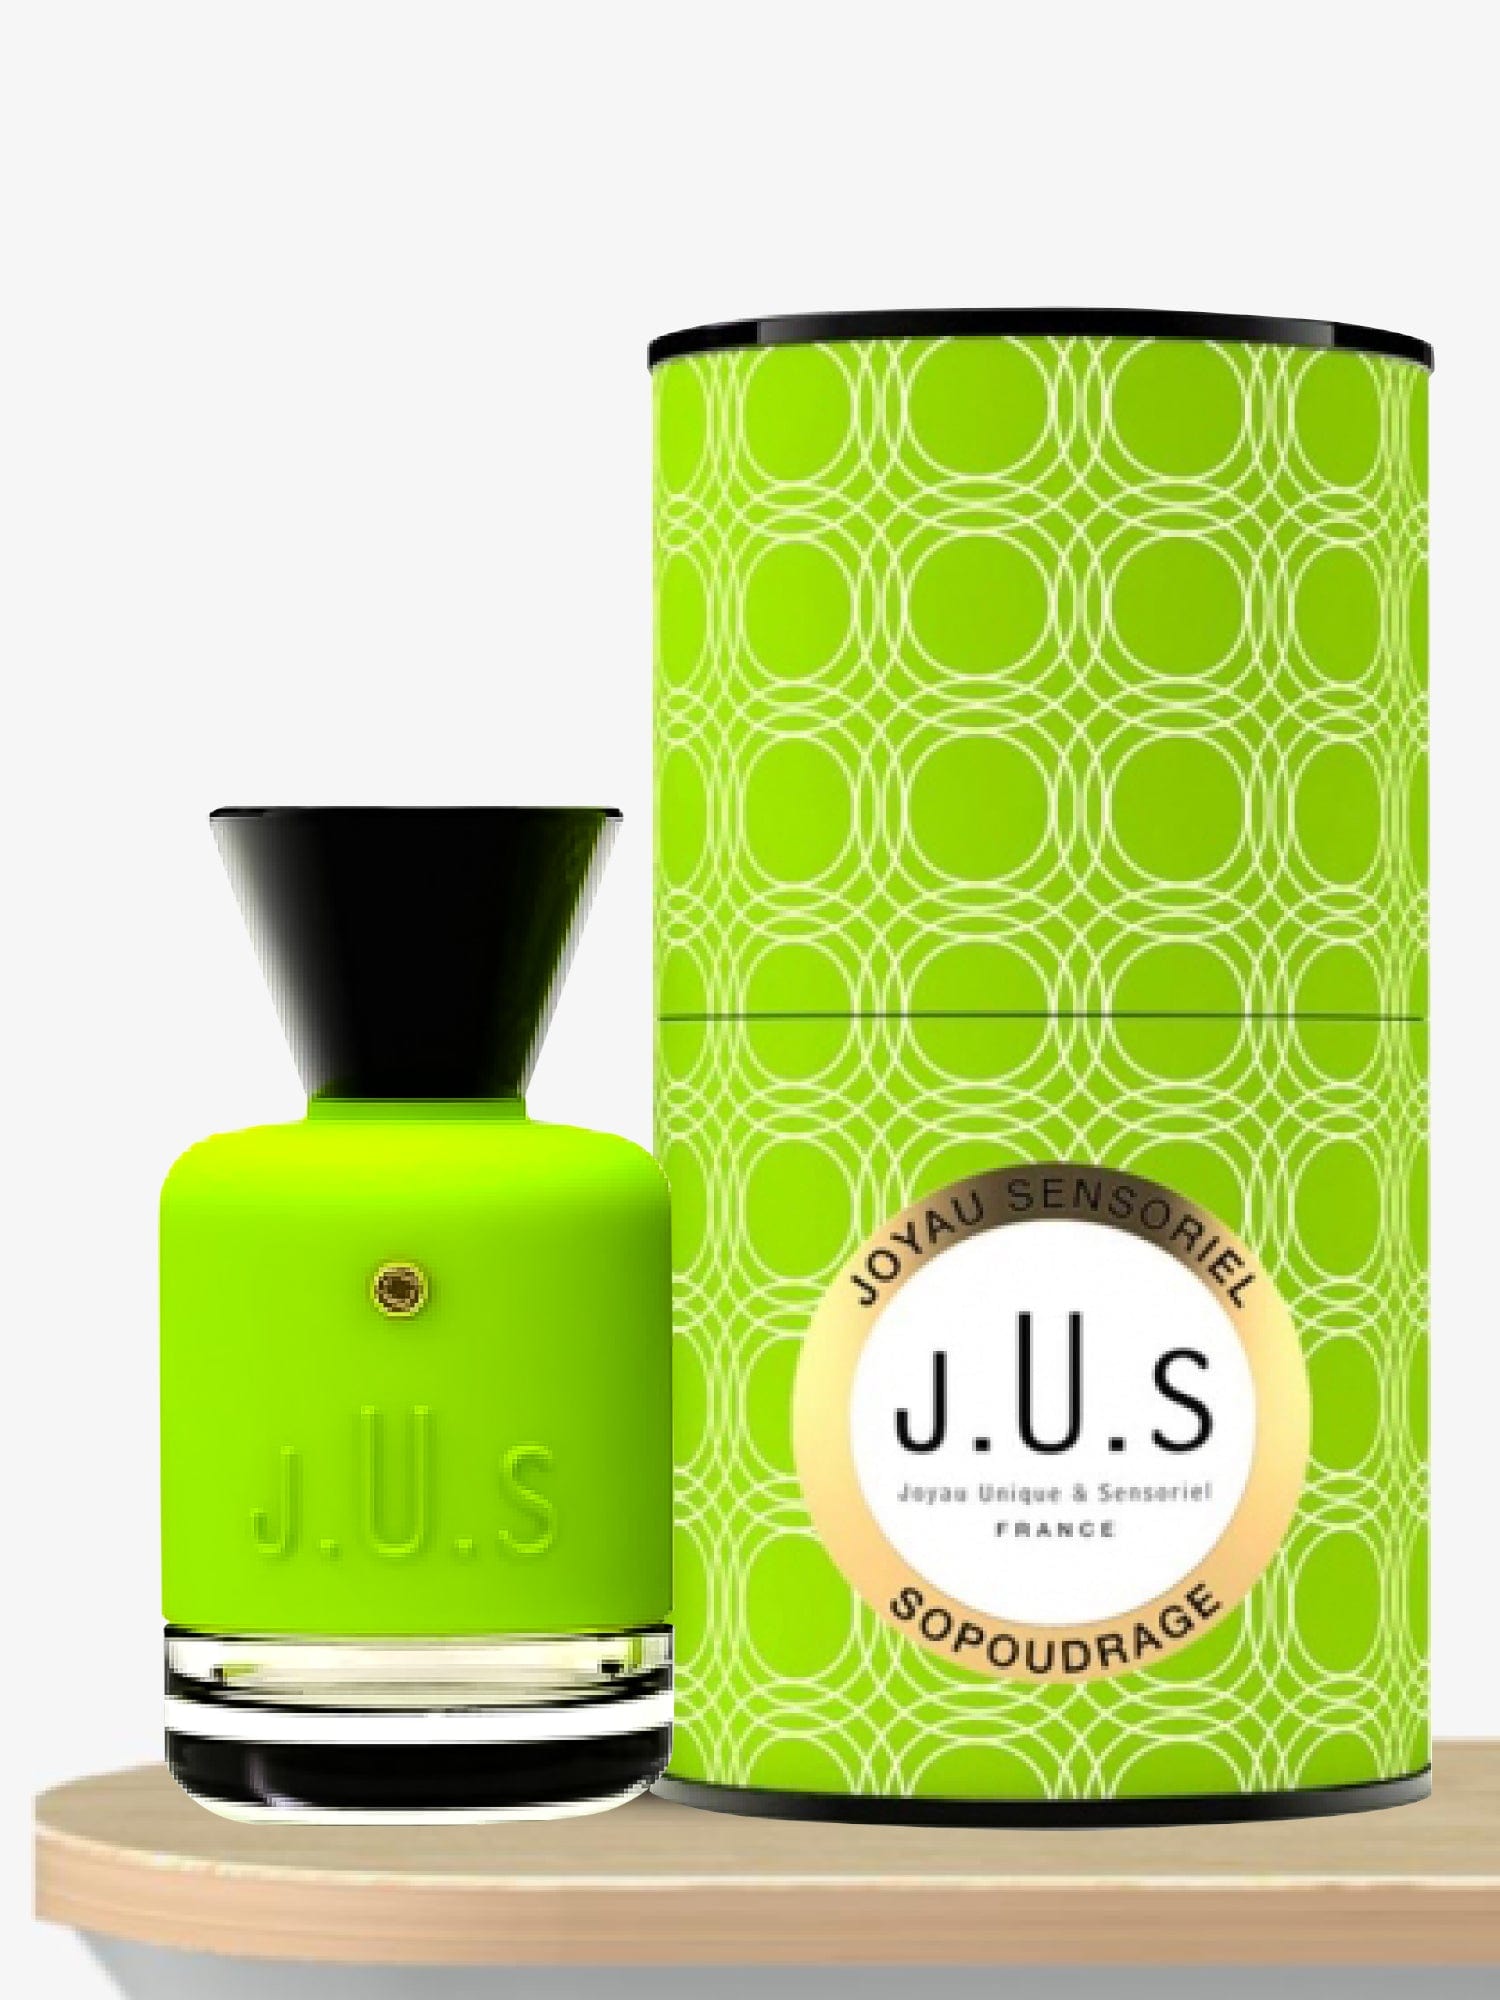 J.U.S Joyau Sensoriel Sopoudrage Parfum 100 mL / Unisex